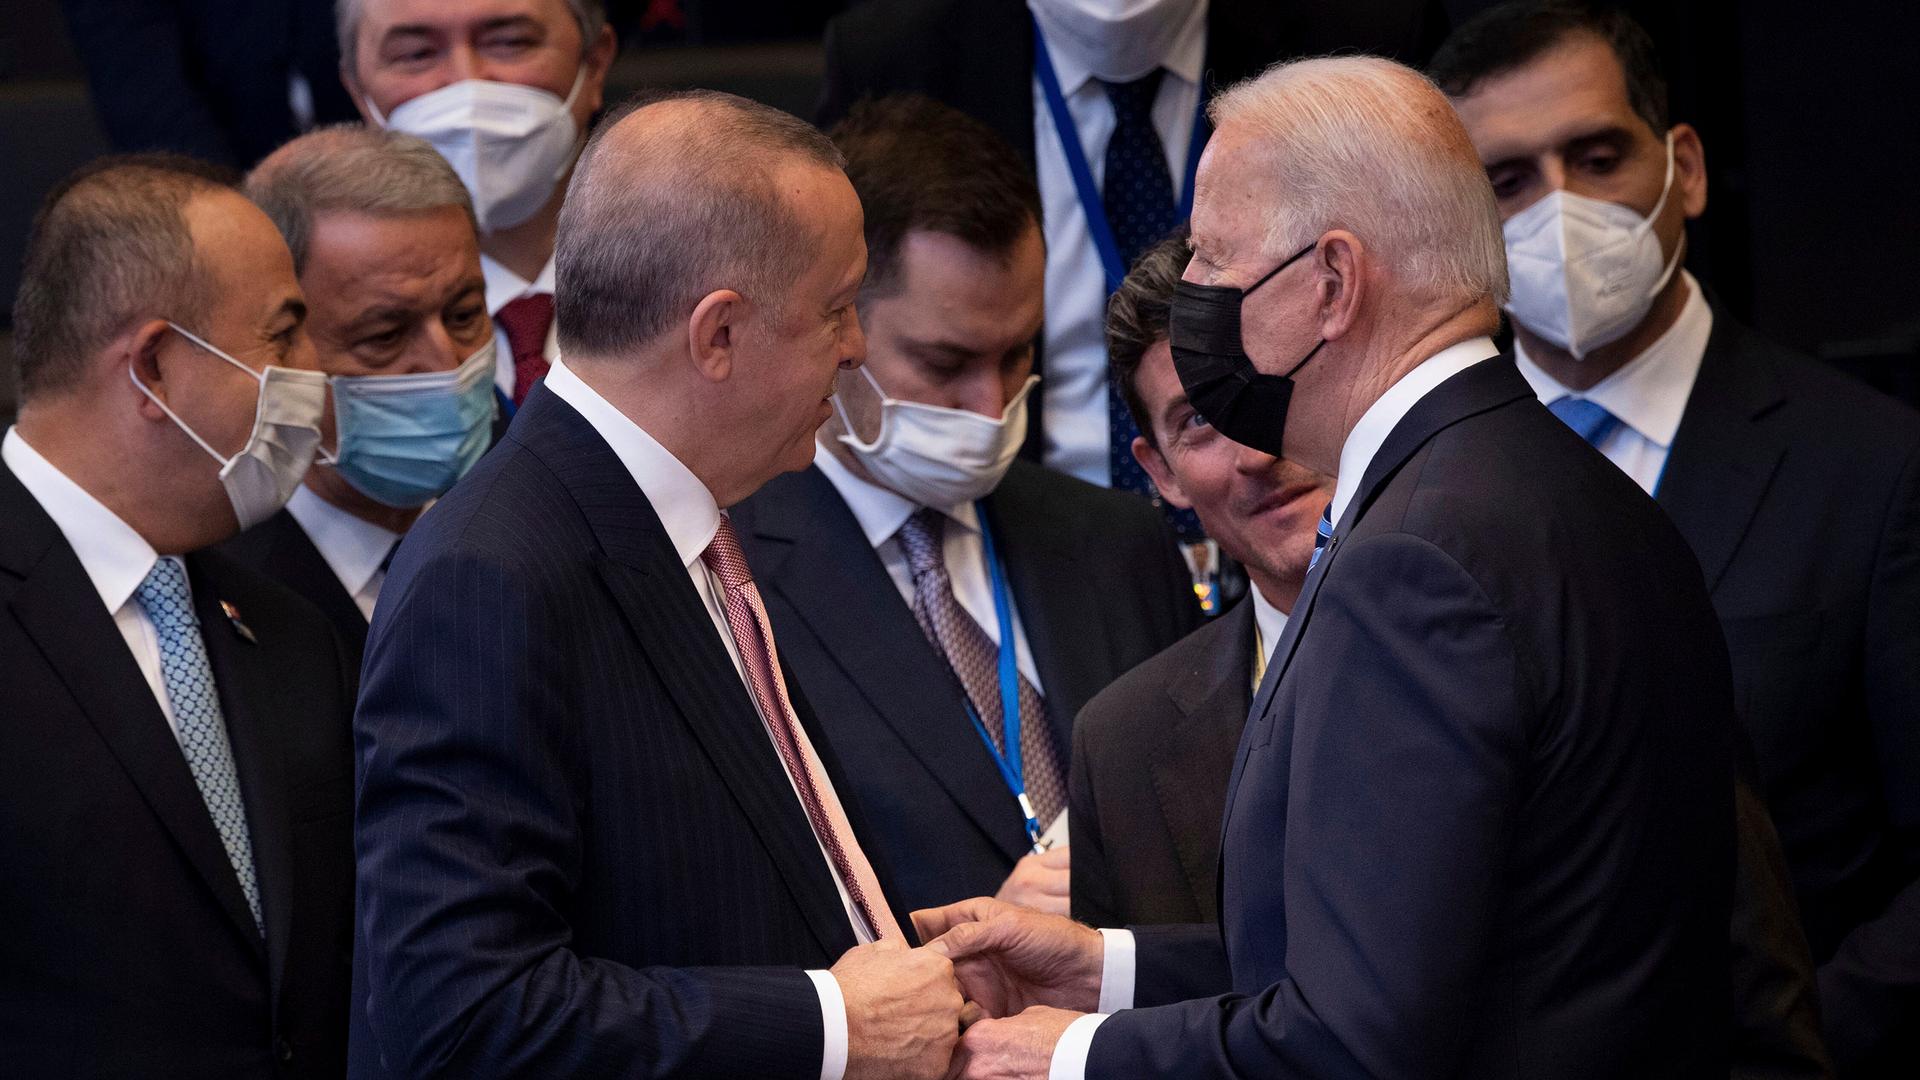 Turkey's President Recep Tayyip Erdoğan, center left, greets US President Joe Biden, center right, during a plenary session during a NATO summit at NATO headquarters in Brussels, Monday, June 14, 2021.